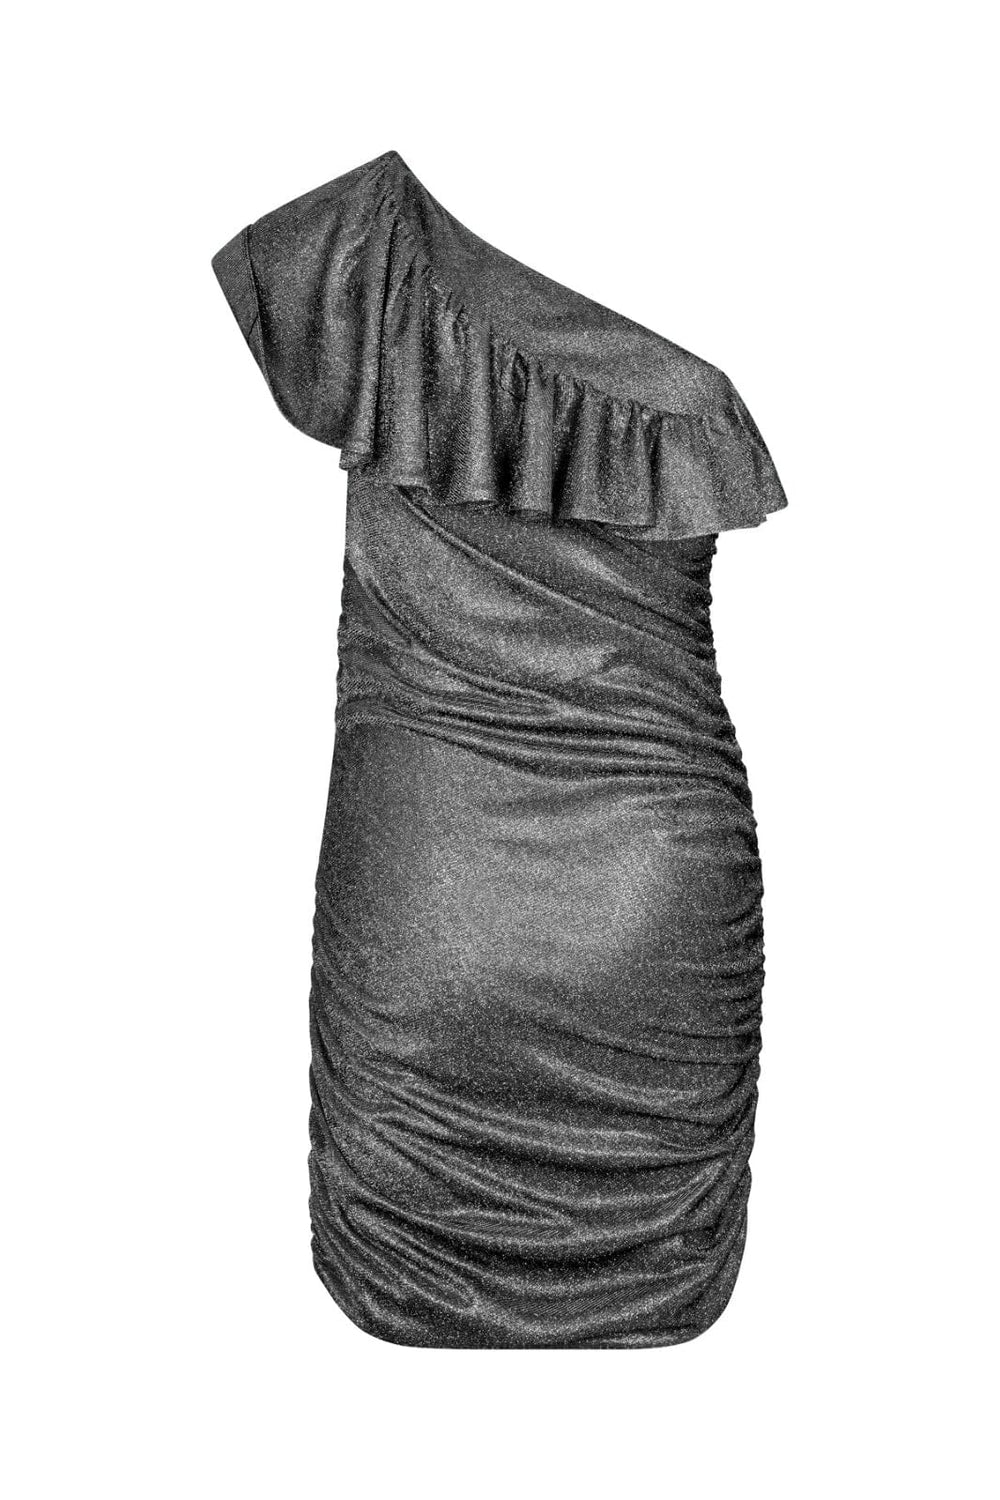 Cras - Iduncras Dress - Smoke Silver Kjoler 